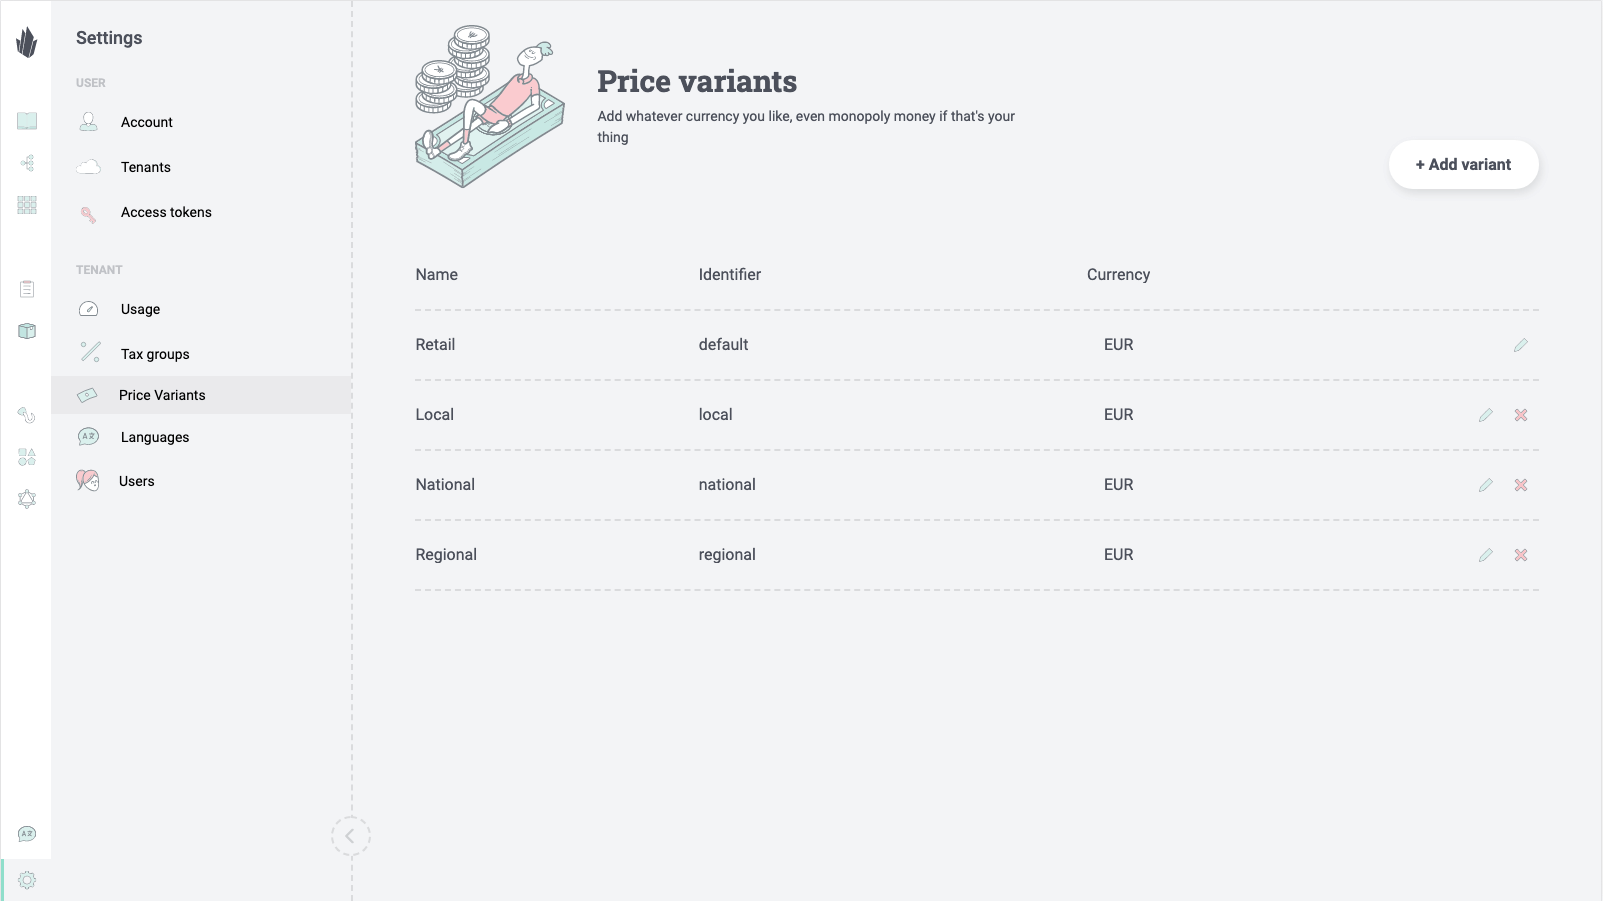 Price variants UI